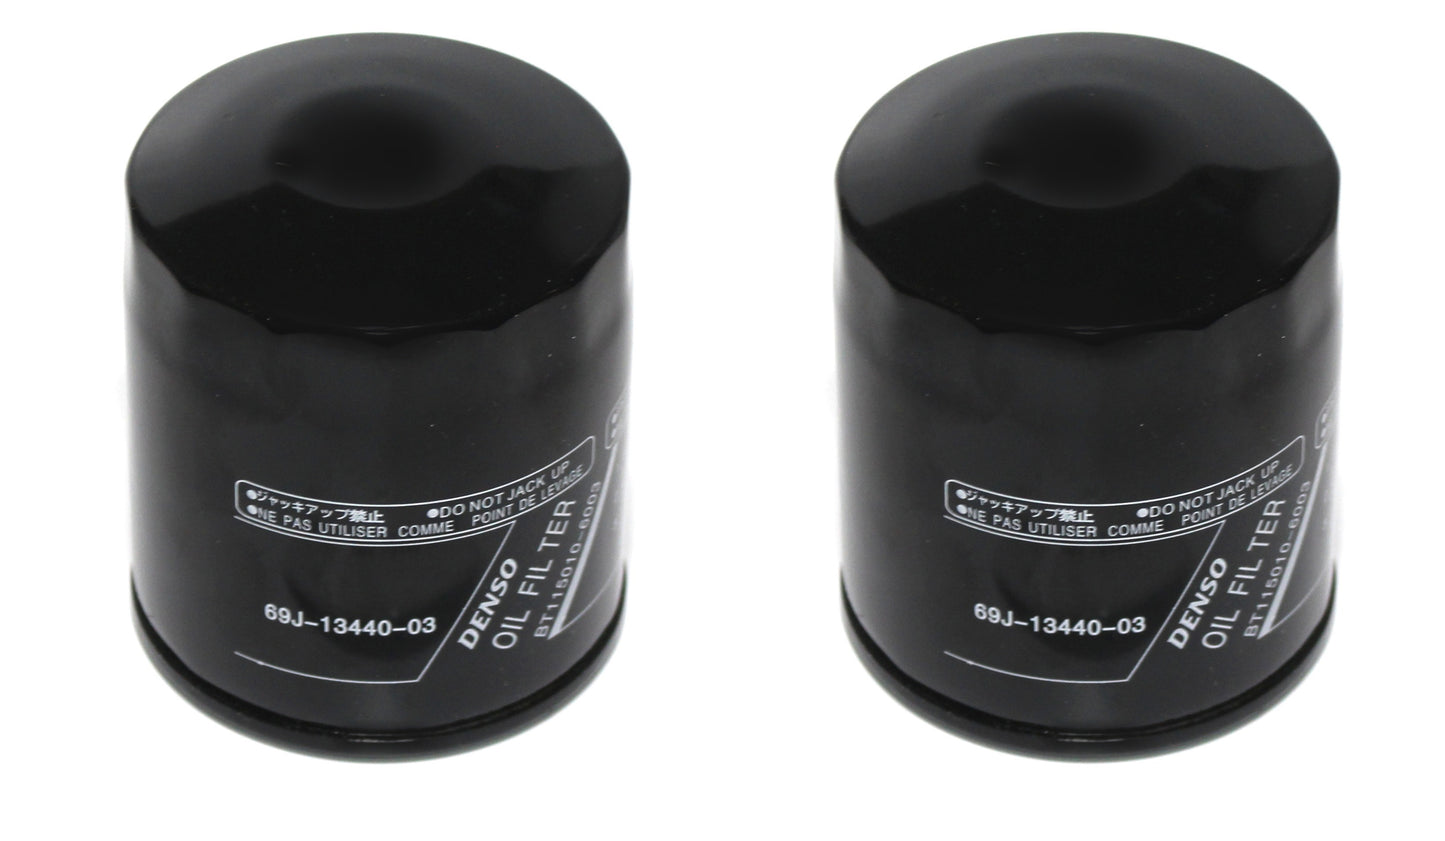 Aftermarket Yamaha Outboard Oil Filter Replaces Yamaha 69J-13440-03-00 150 200 225 250 HP